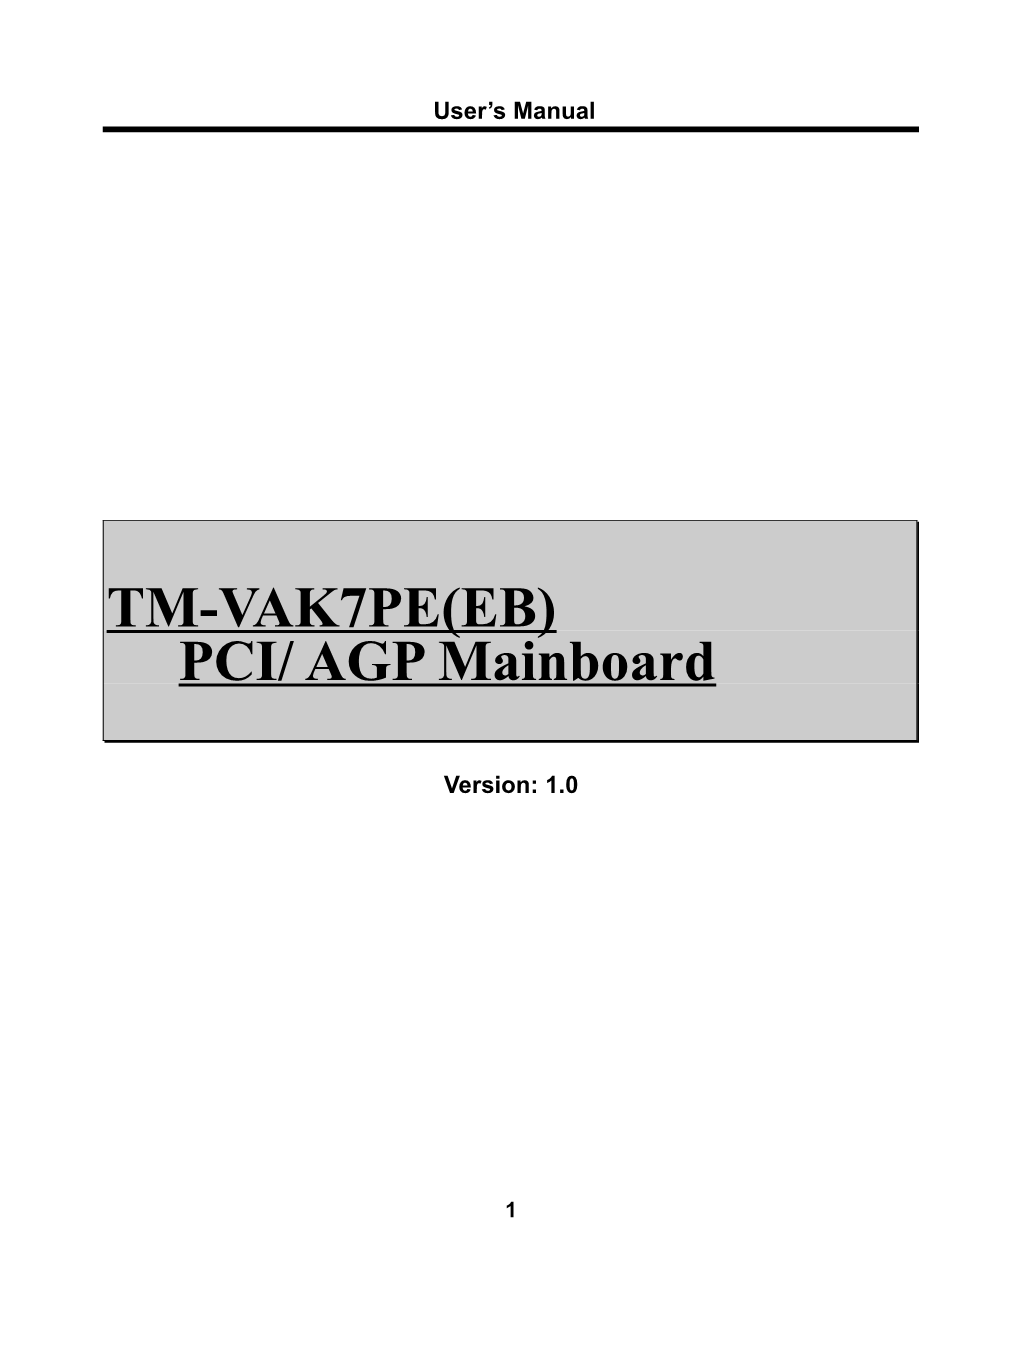 PCI/ AGP Mainboard